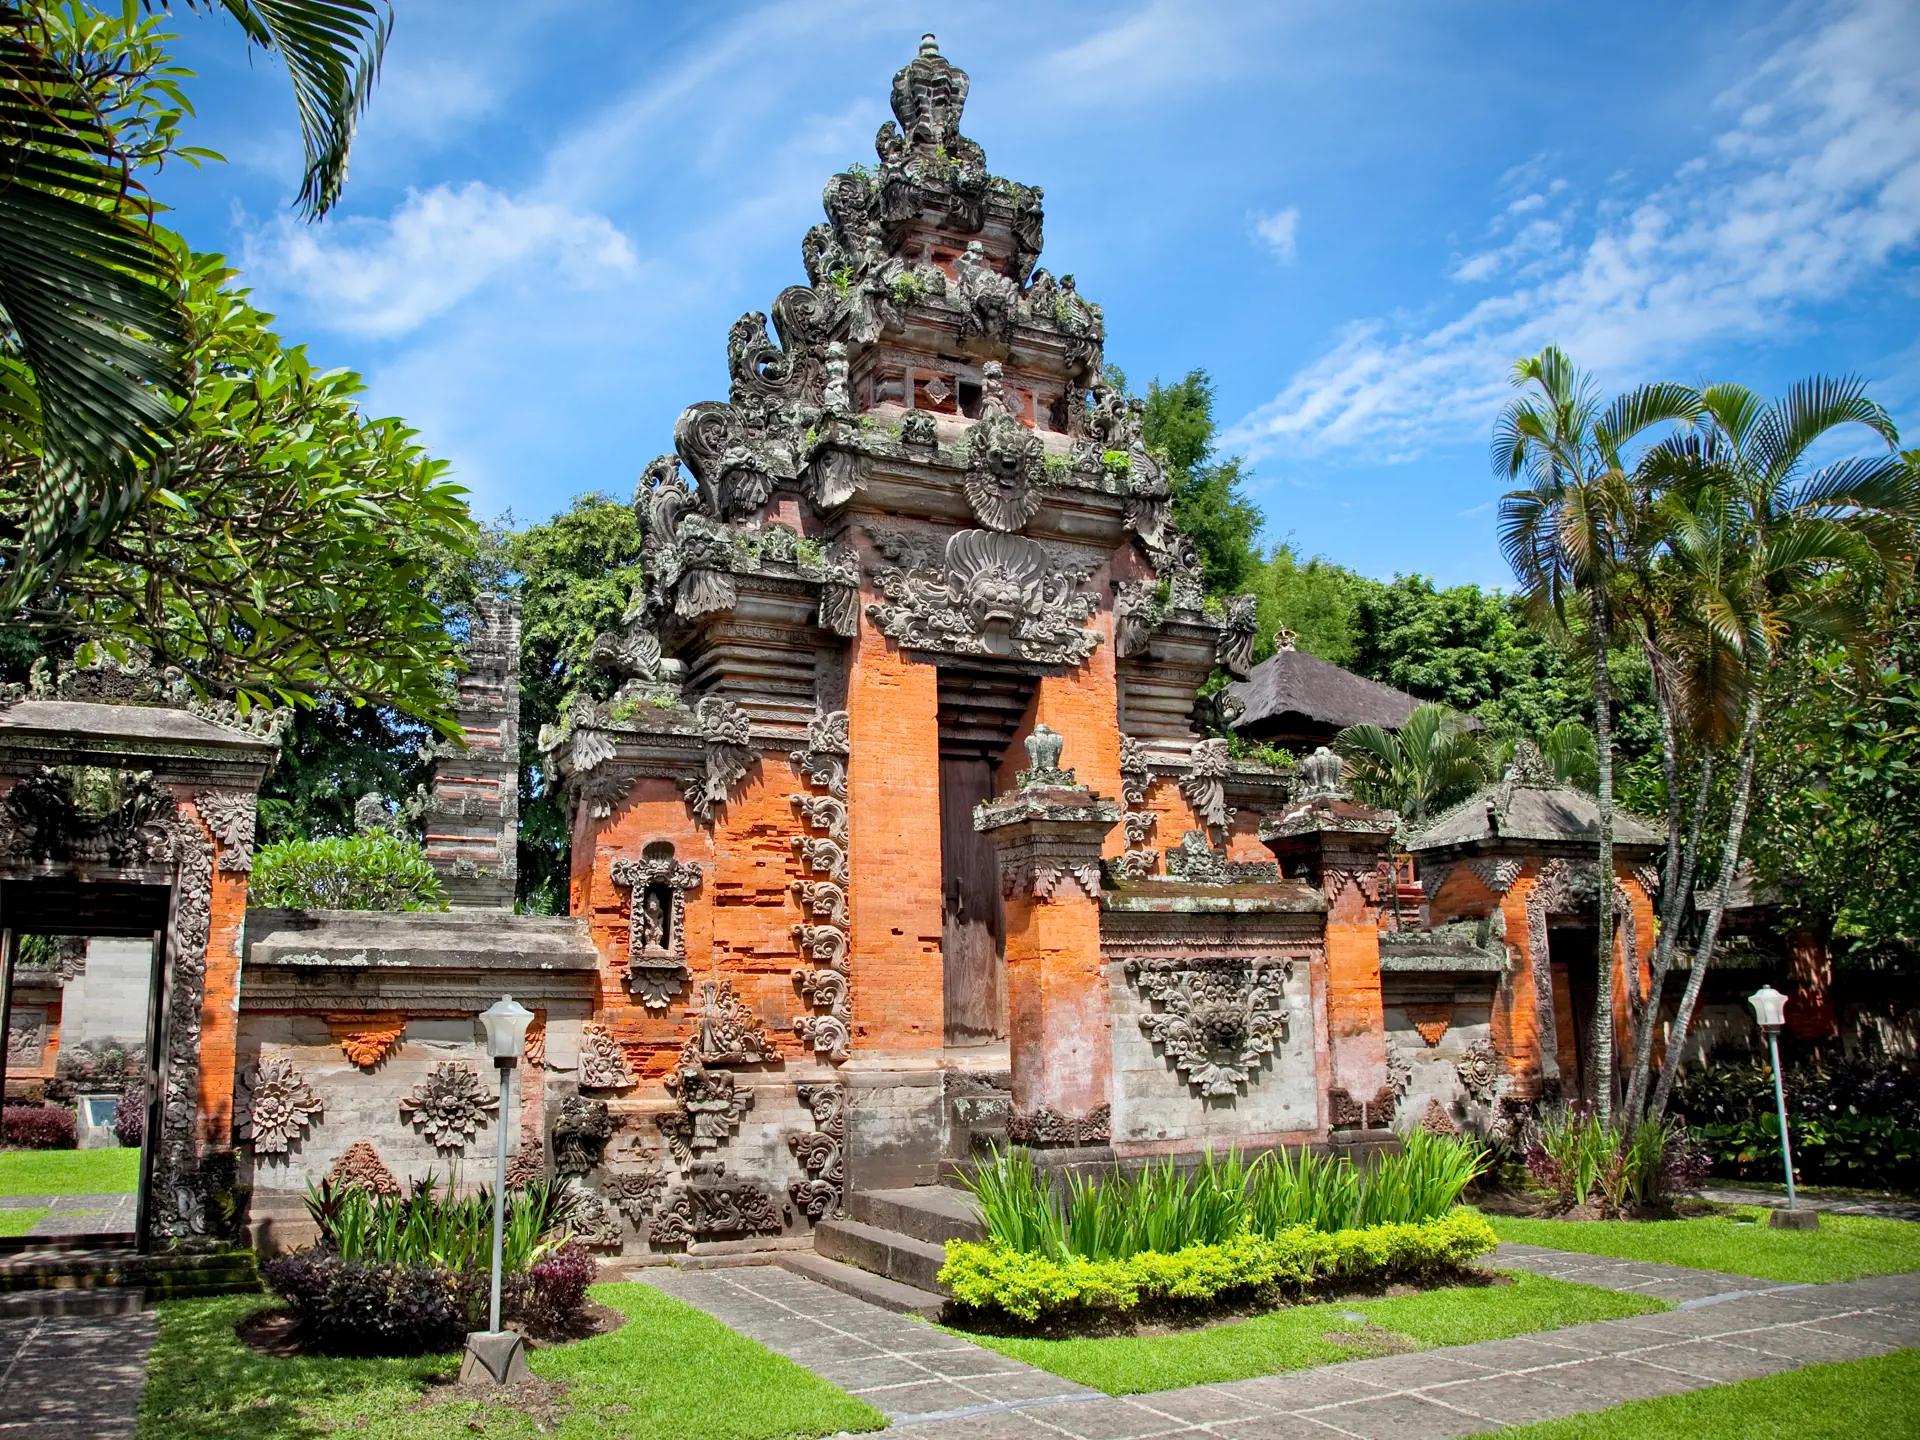 shutterstock_120576172 Entrance gate of Negeri Propinsi Museum in Denpasar, Bali, Indonesia.jpg